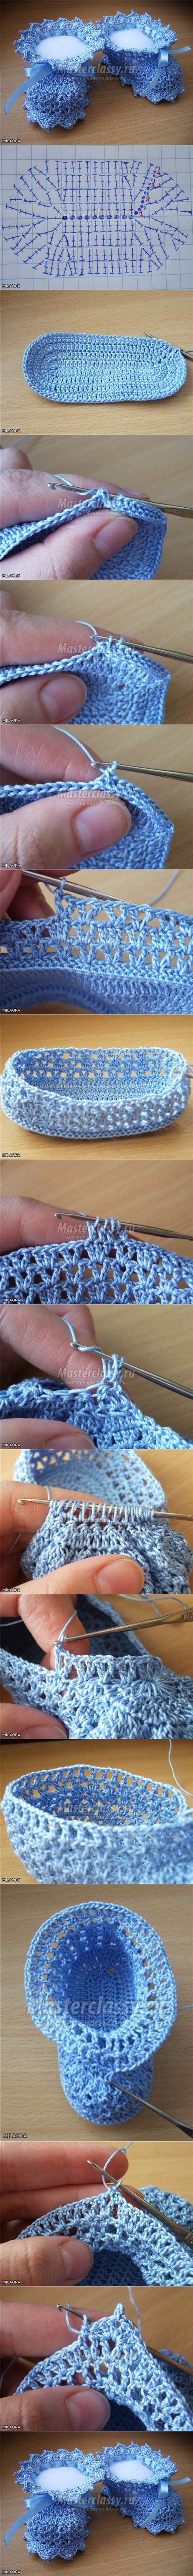 DIY Cute Crochet Baby Booties 2